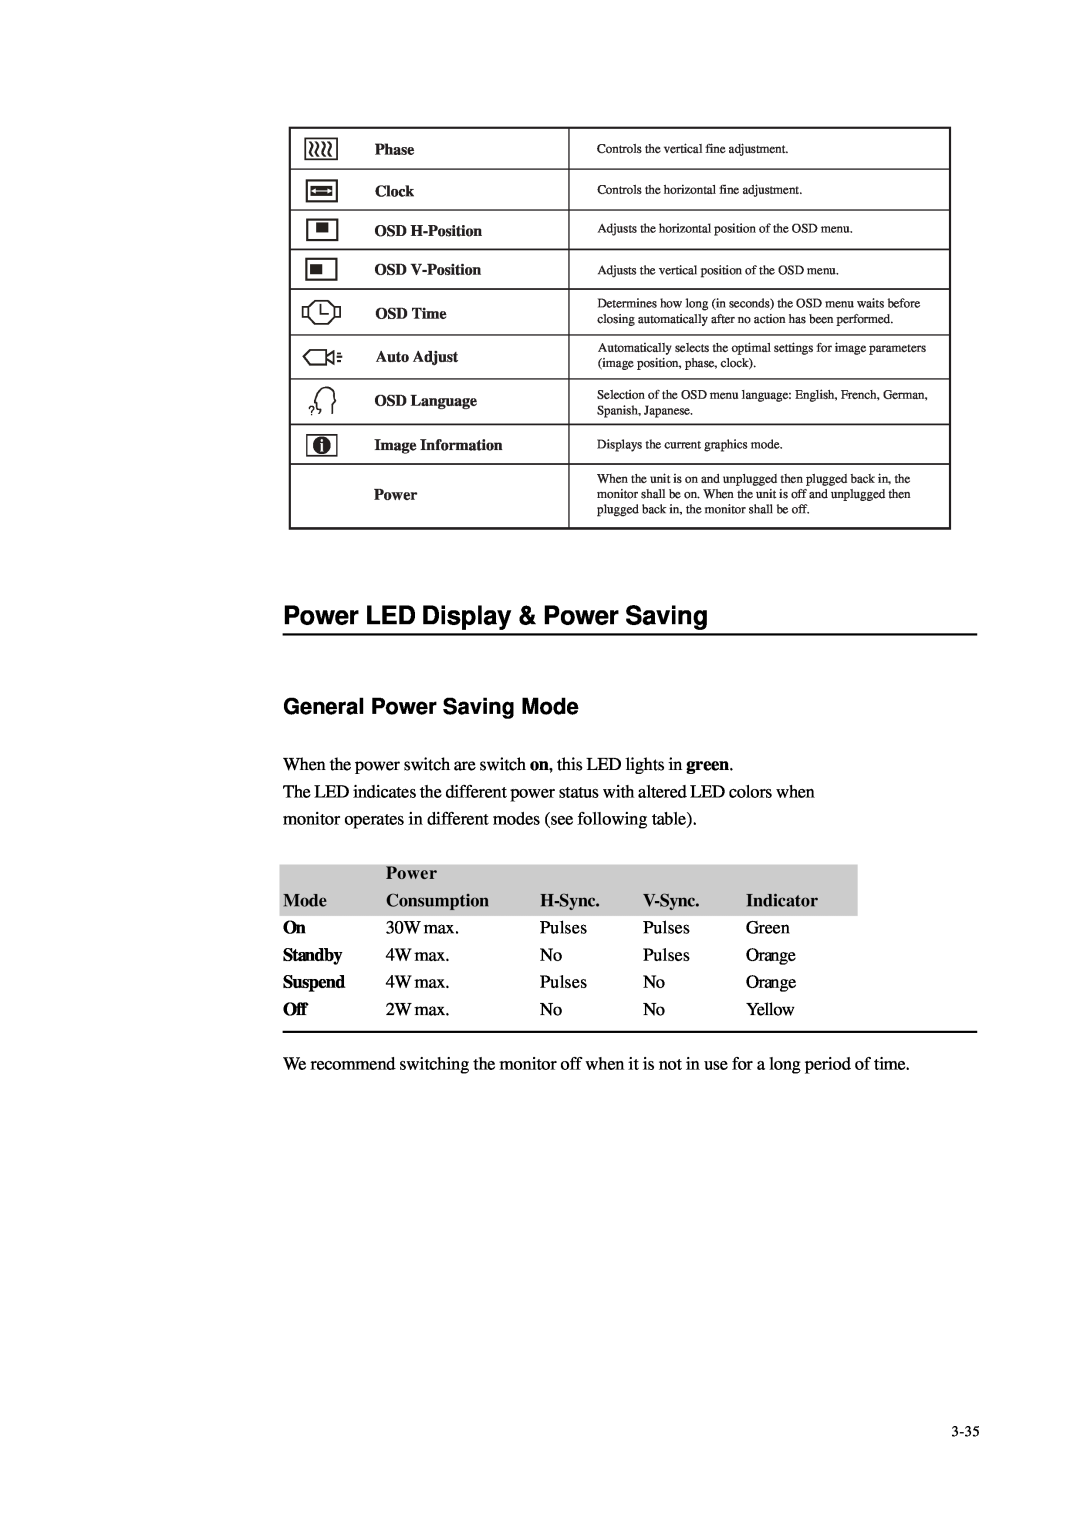 Tyco Electronics 1229L Power LED Display & Power Saving, General Power Saving Mode, Consumption, H-Sync, V-Sync, Indicator 